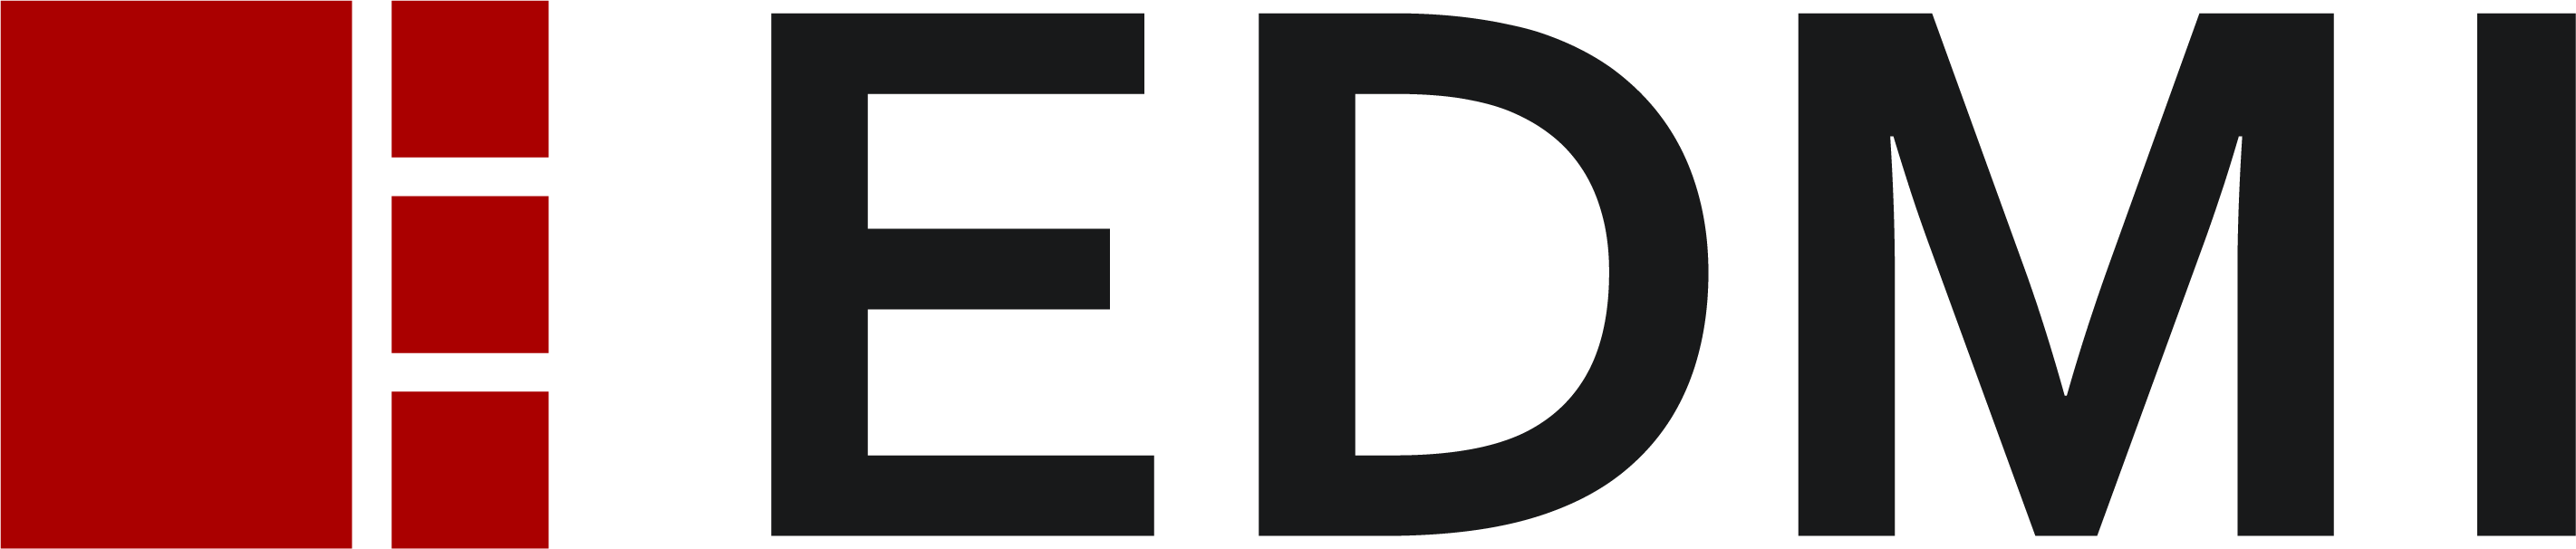 EDMI_logo_standard_RGB_300dpi.png